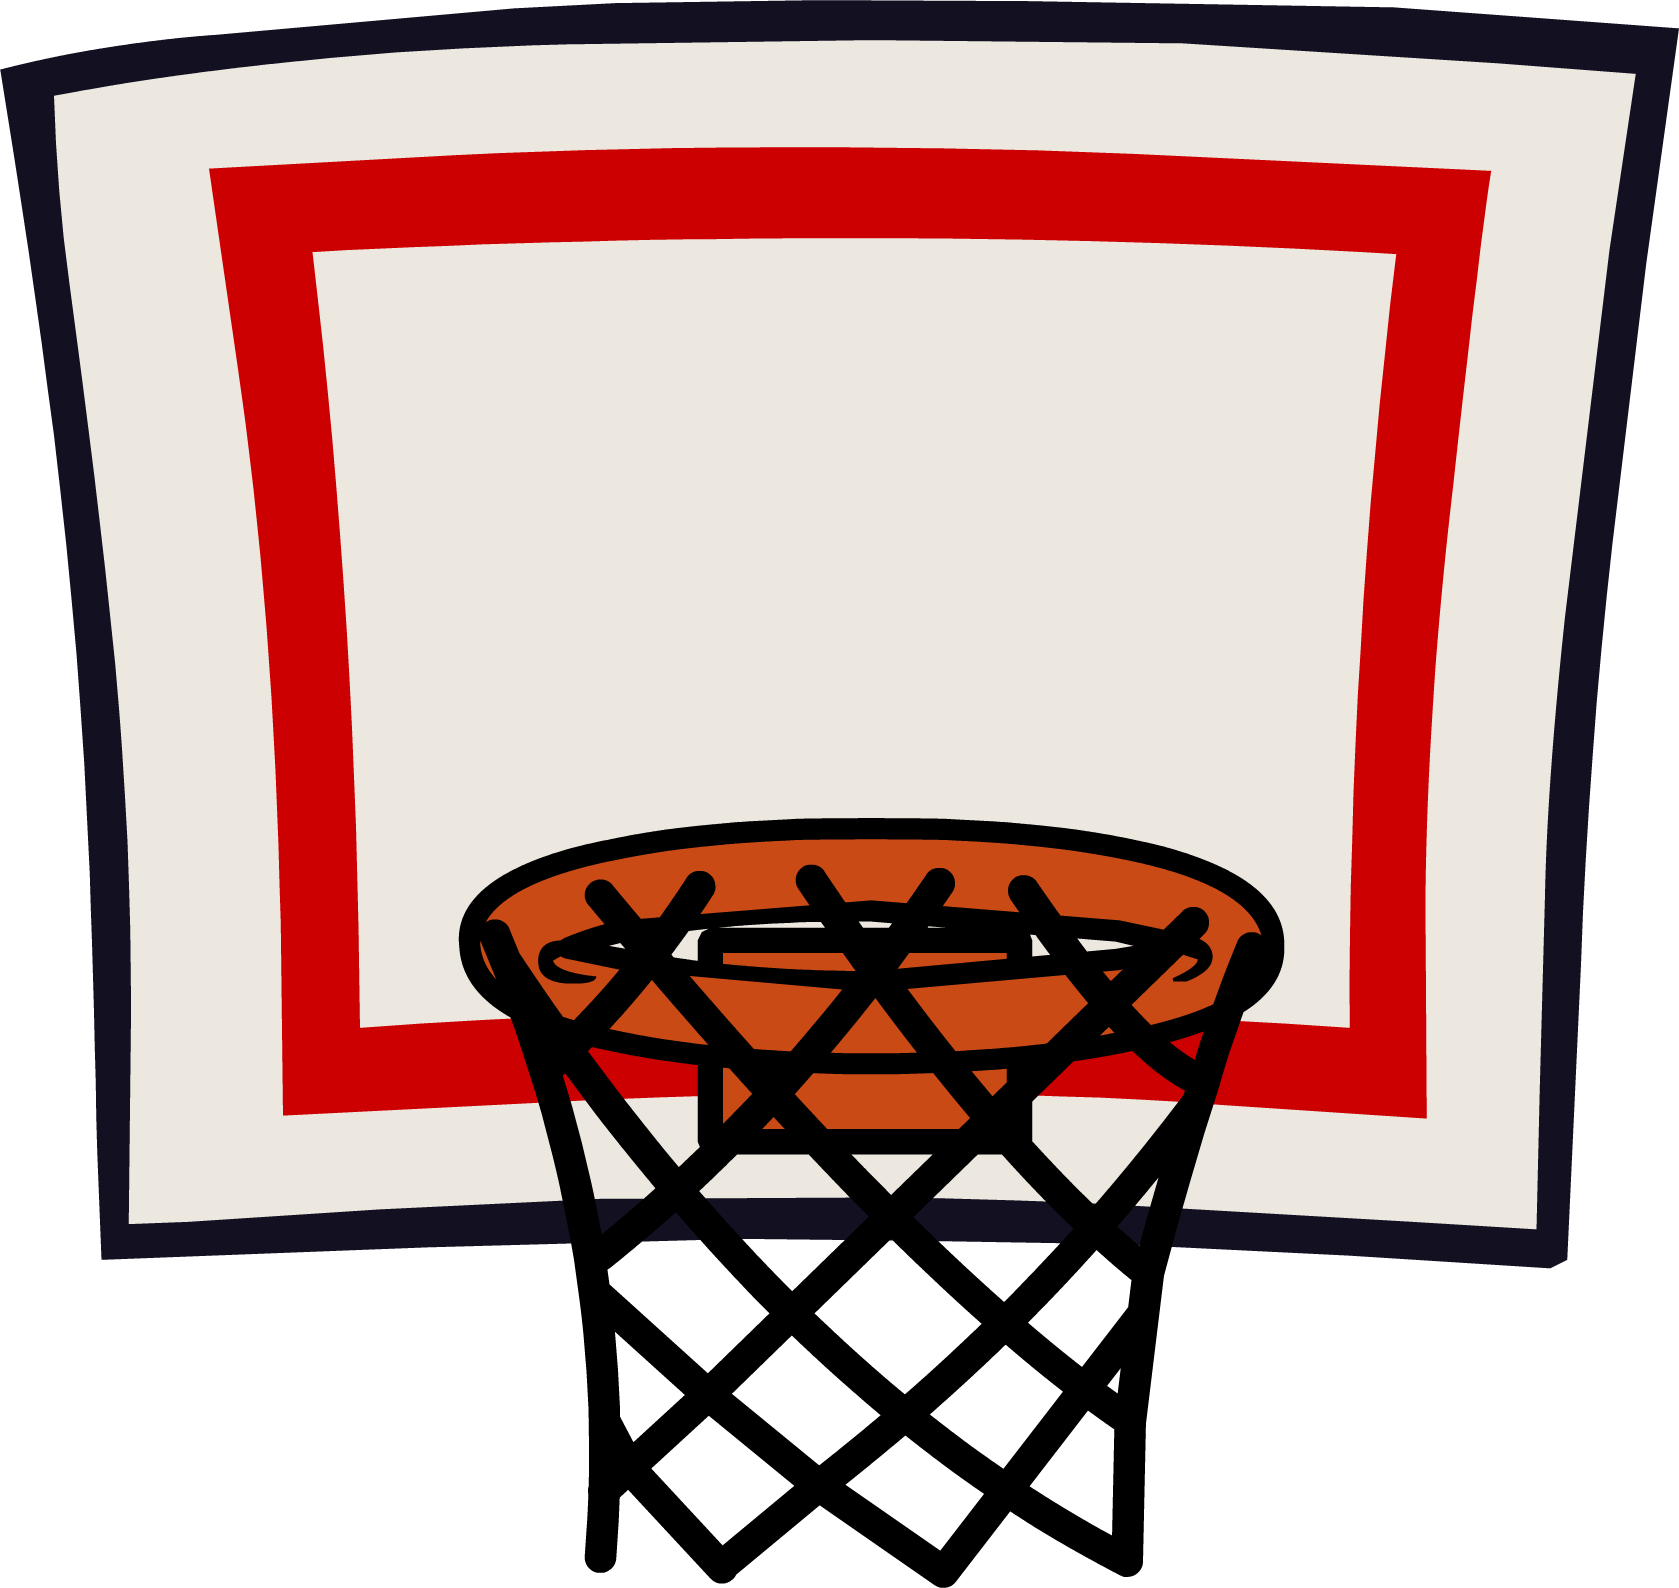 Basketball hoop clipart free